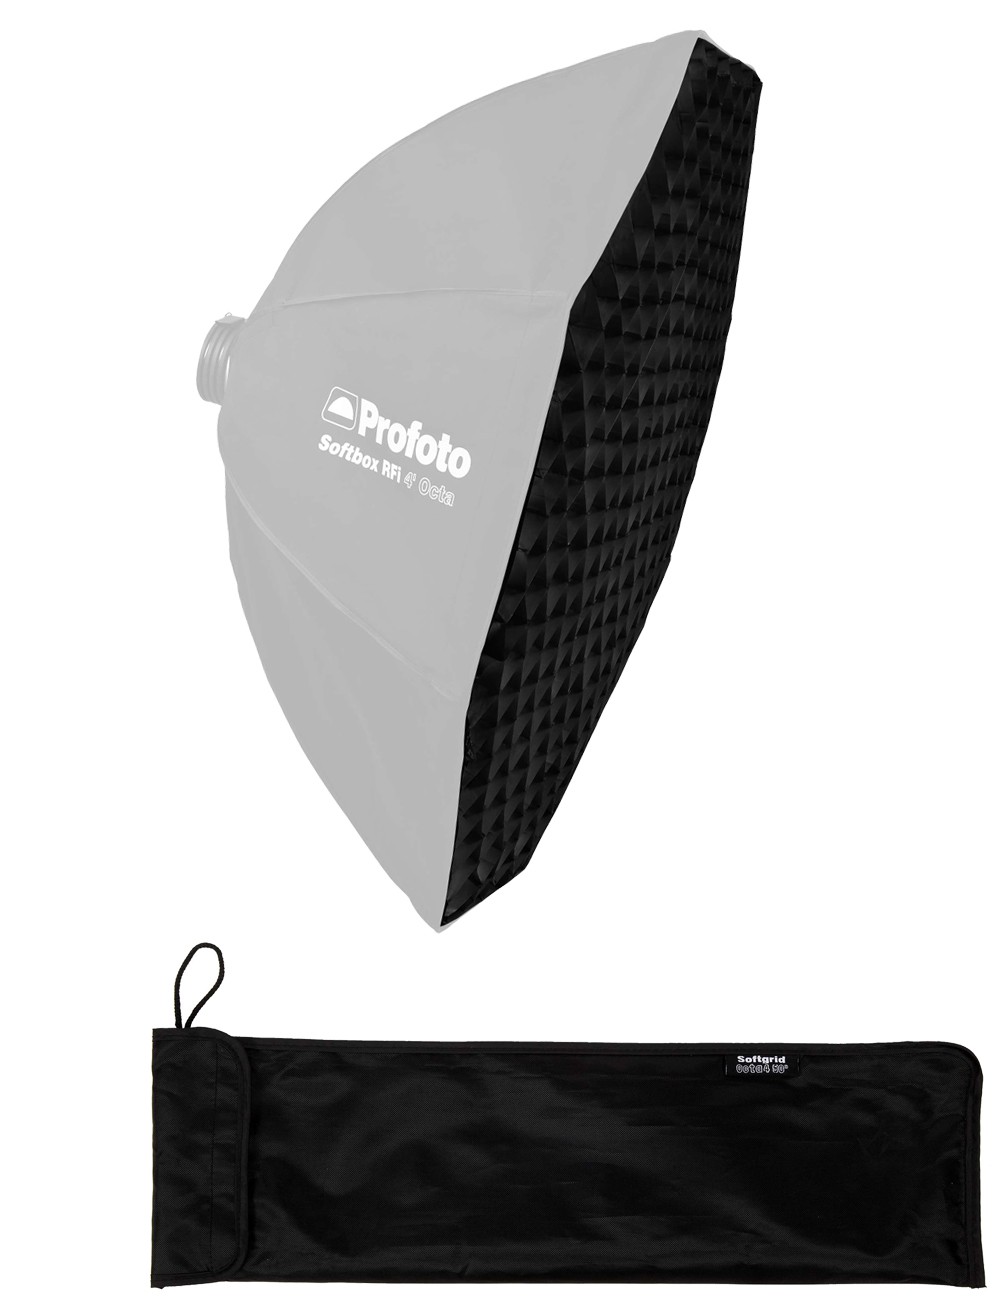 PROFOTO Softbox Rfi 4” 120cm – Grid Octa